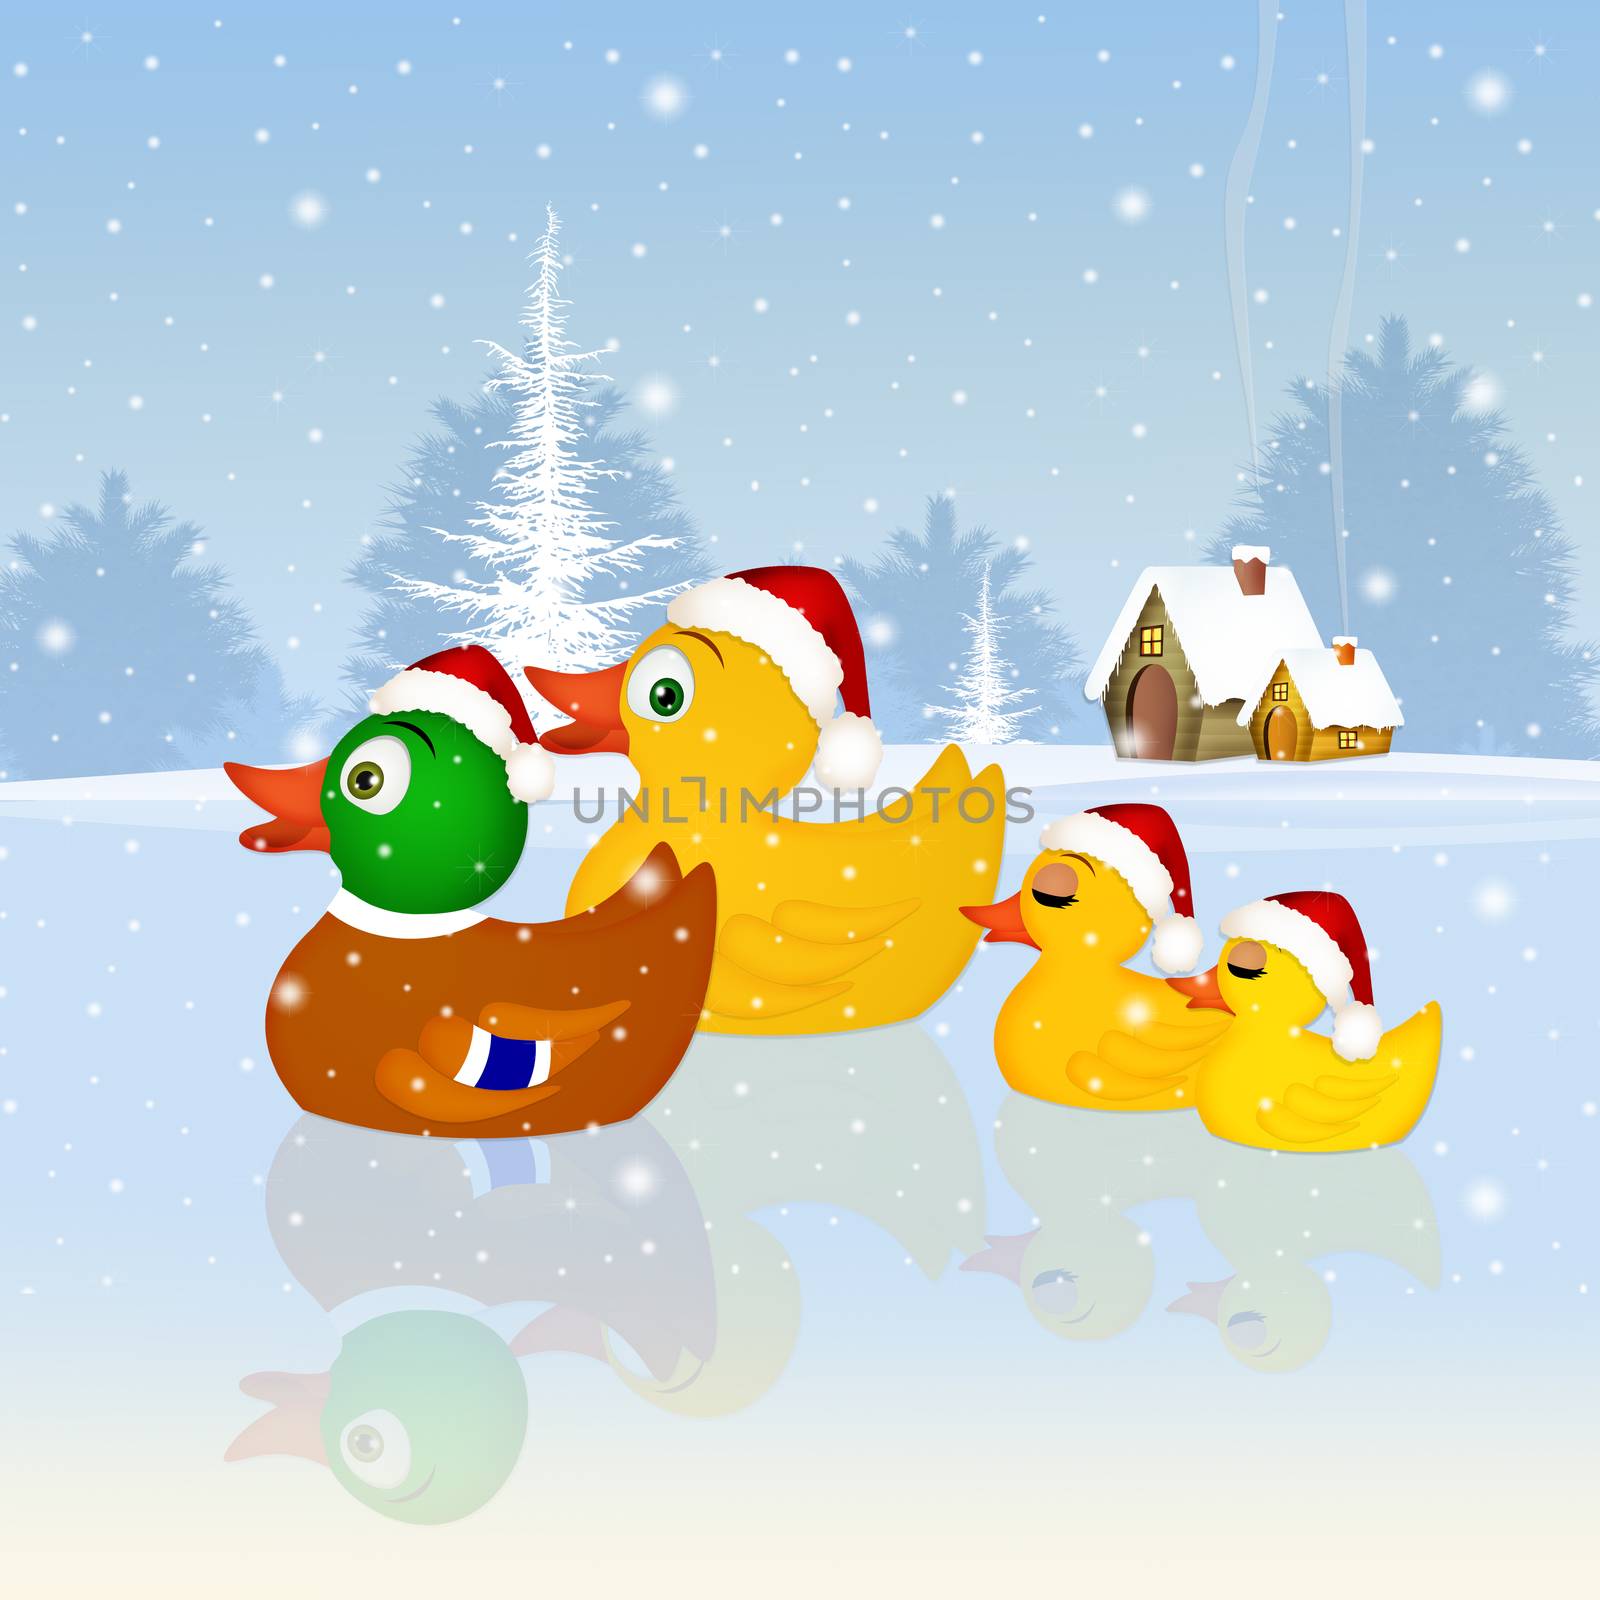 illustration of family of ducks at Christmas